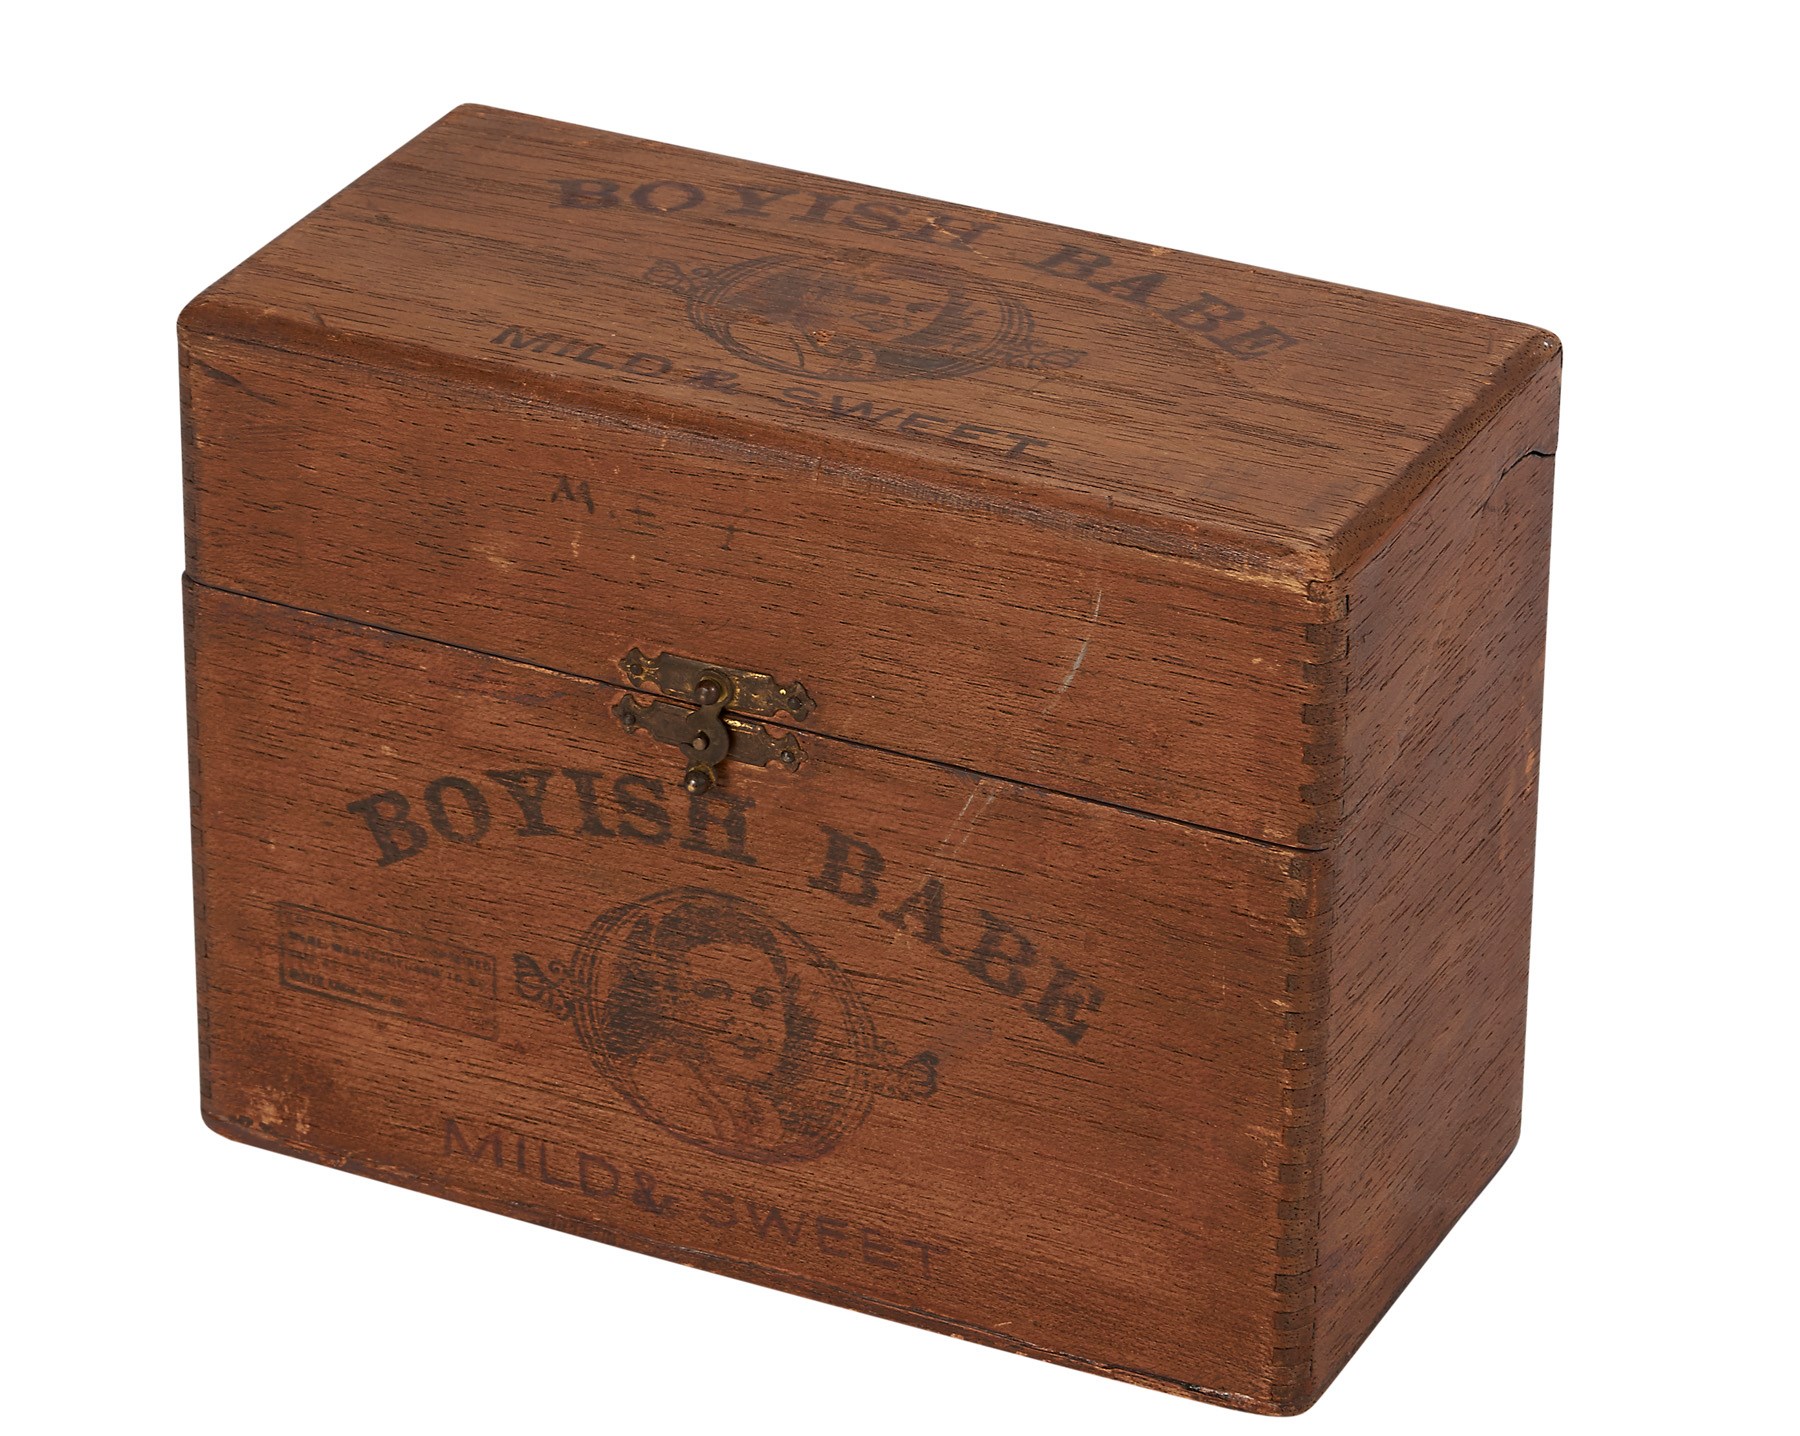 - 1920s "Boyish Babe" Babe Ruth Cigar Box